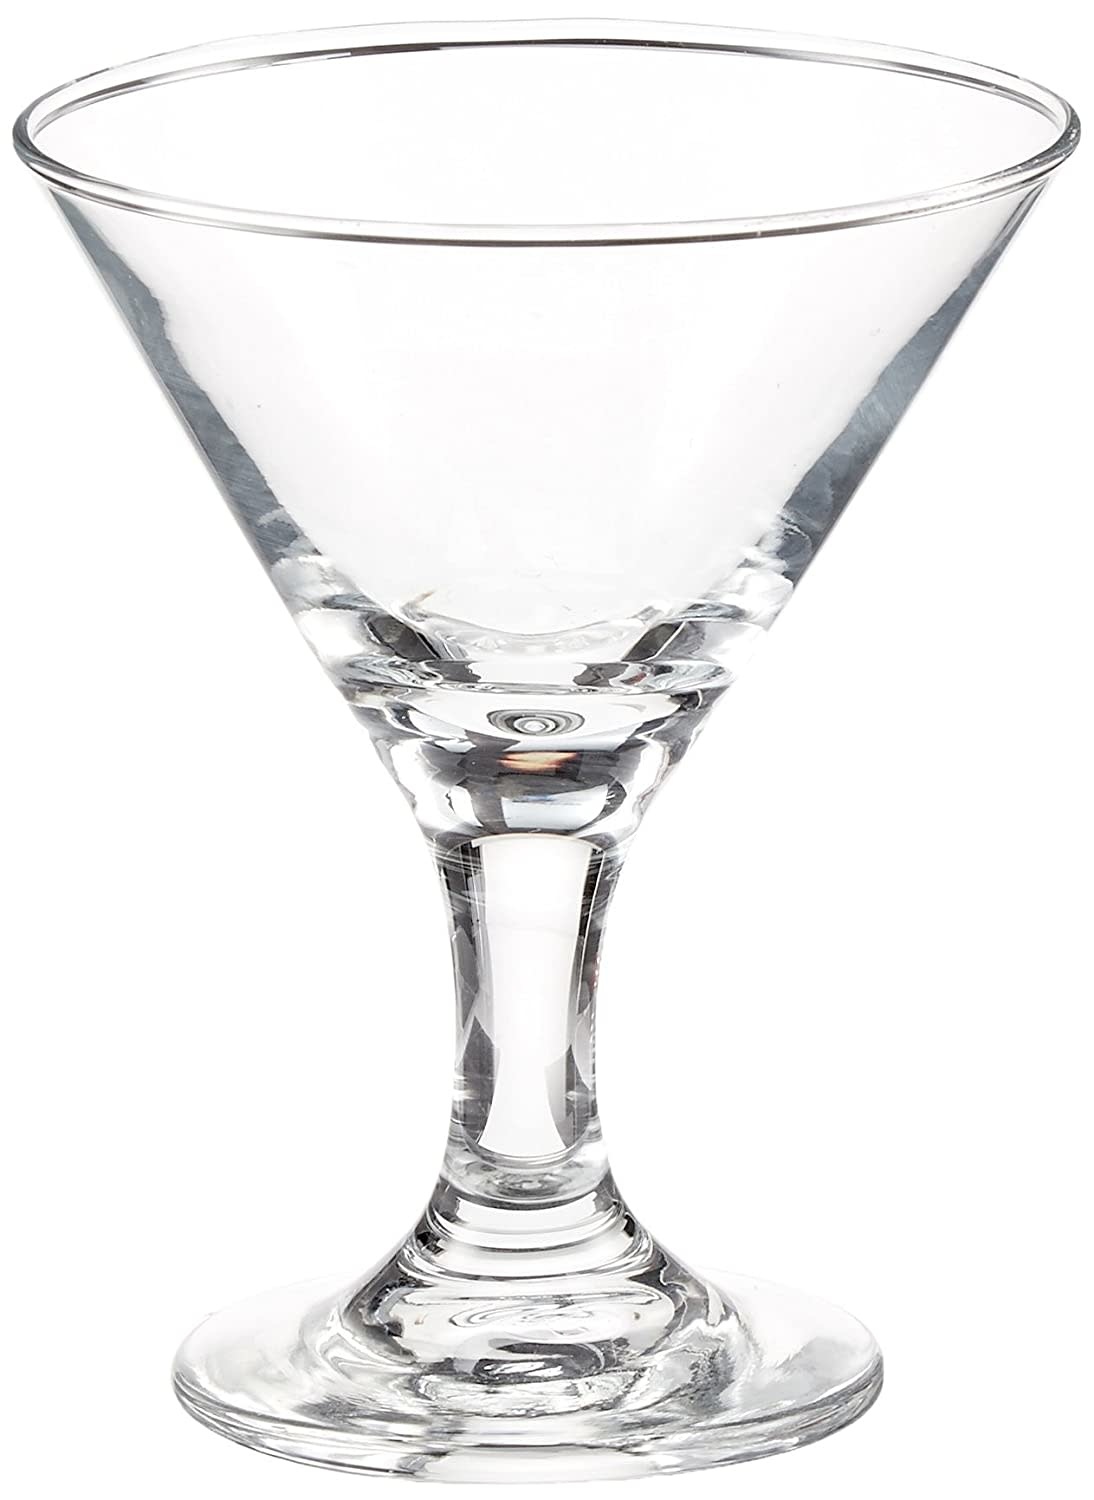 3.5 oz Mini Square Martini Taster Glass